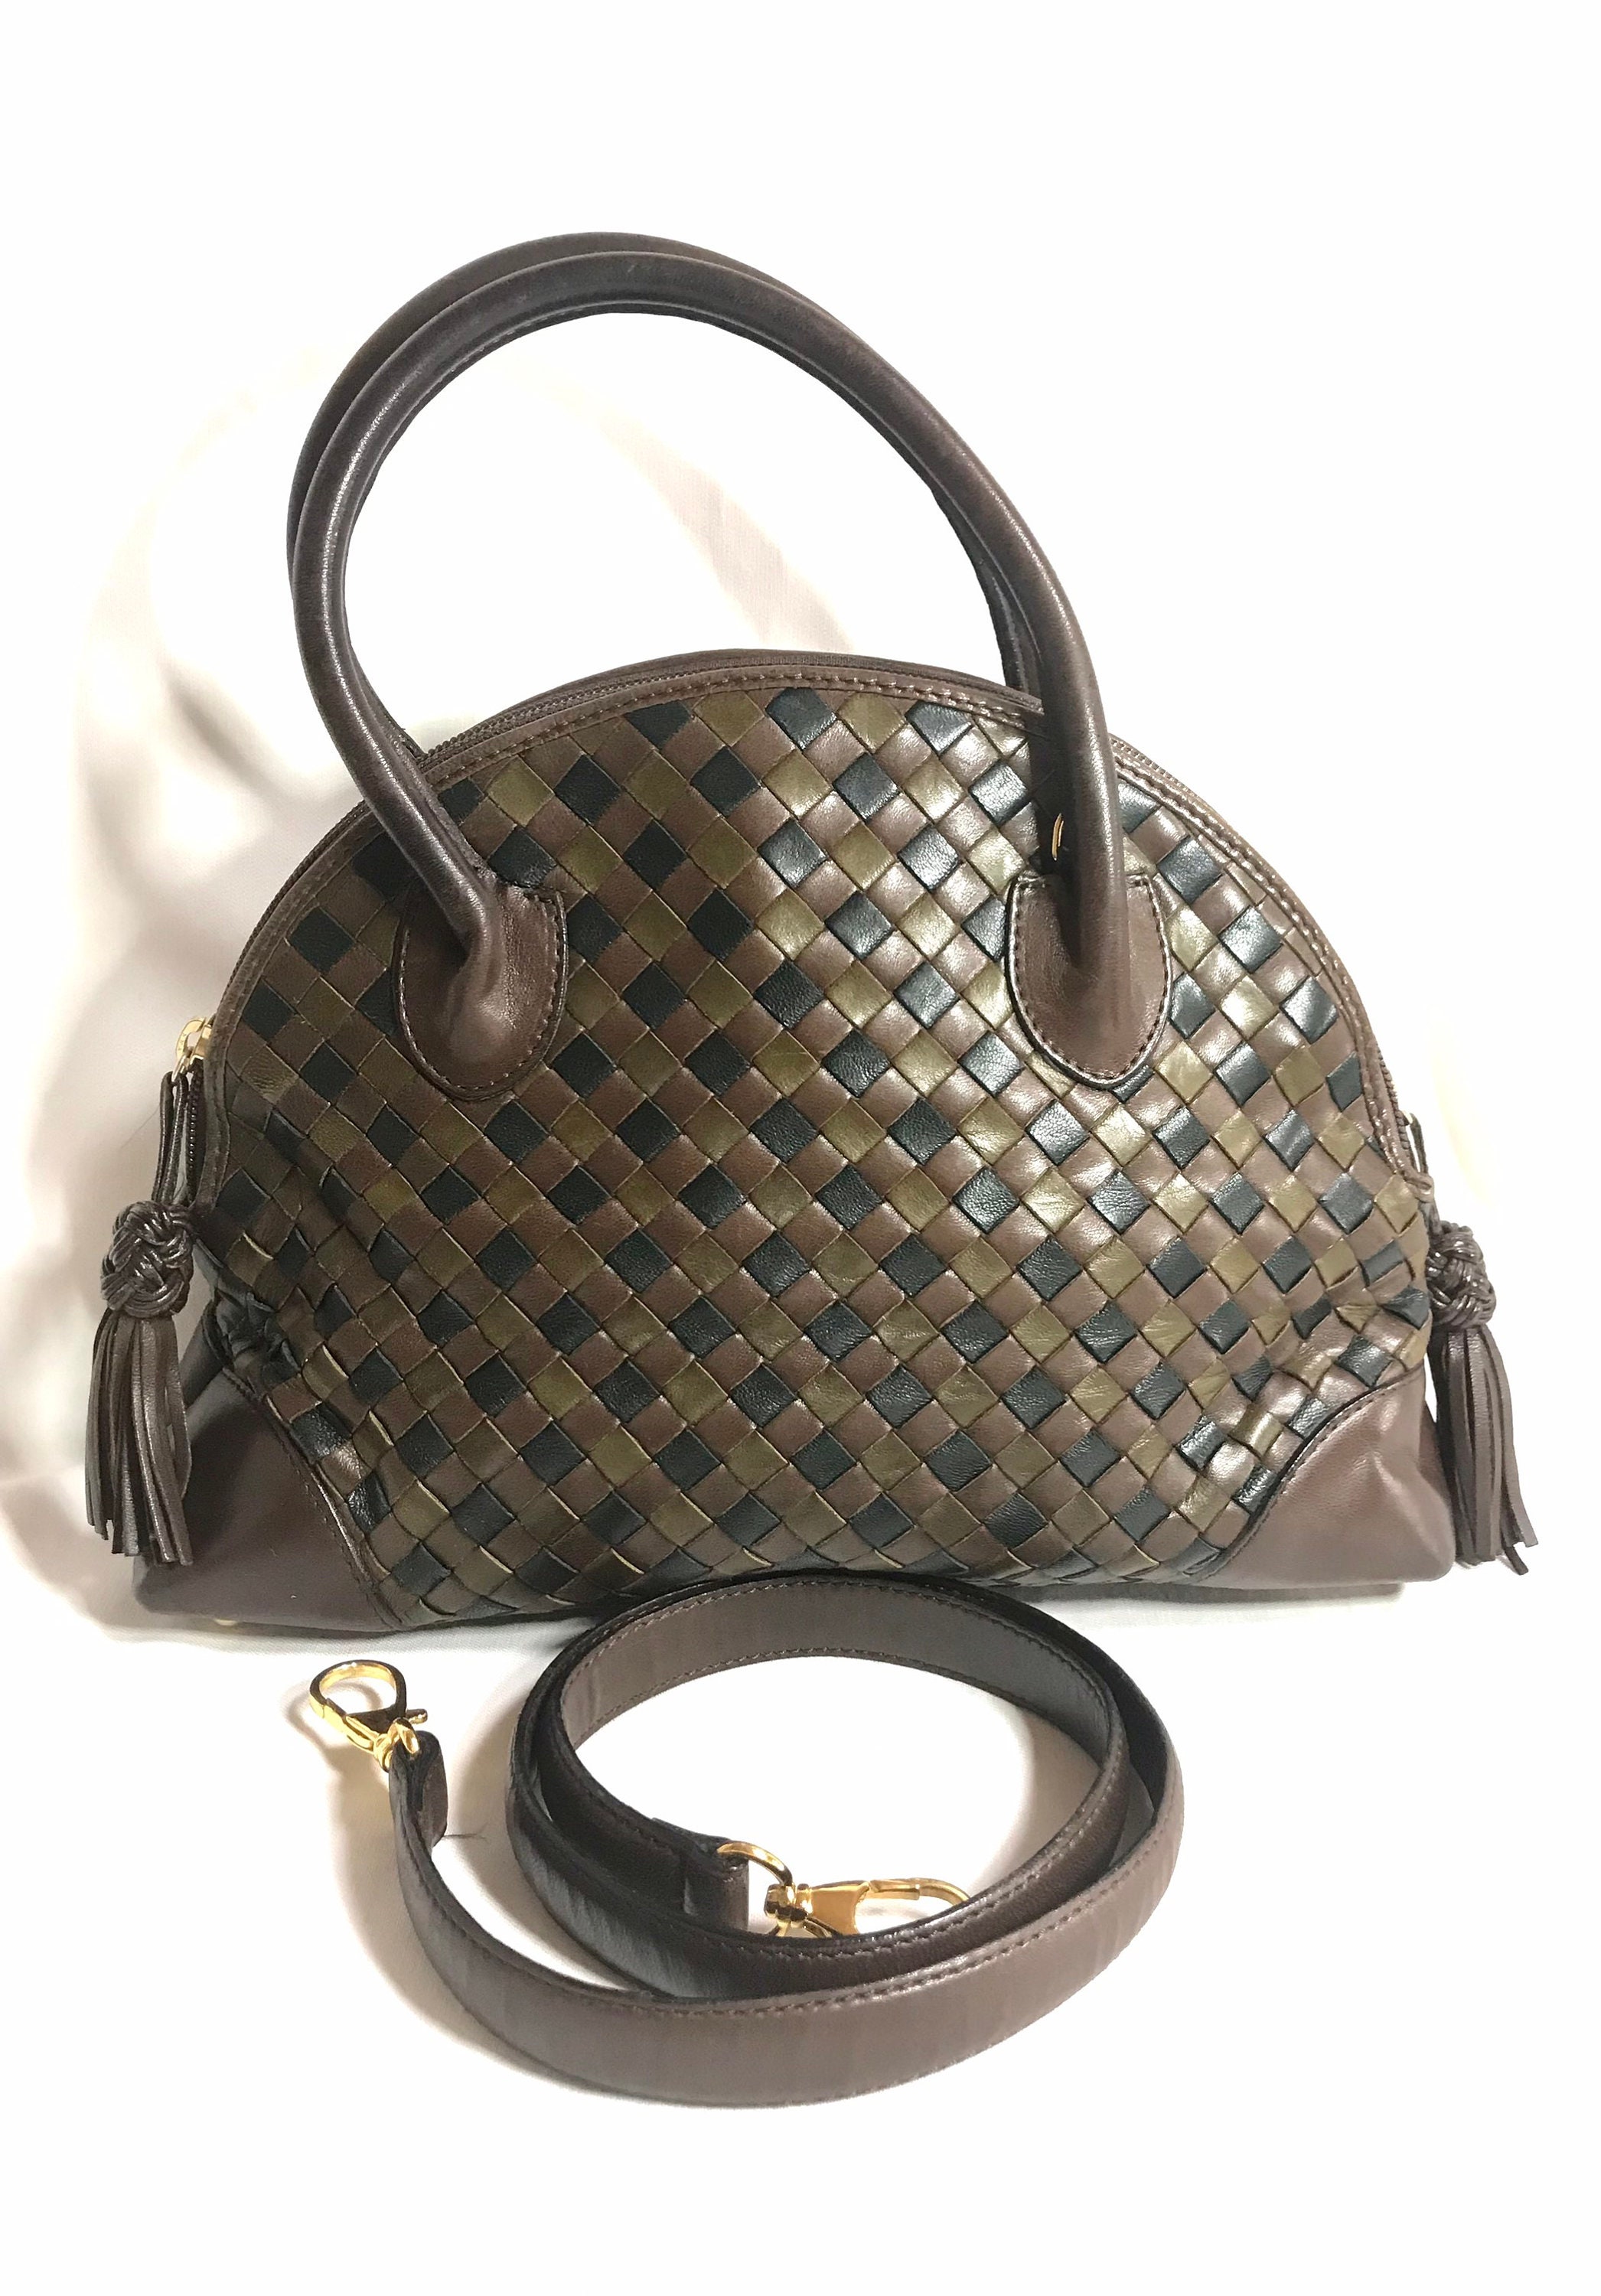 Bottega Veneta The Knot intrecciato gold-tone clutch  Bottega veneta  handbag, Genuine leather purse, Genuine leather handbag